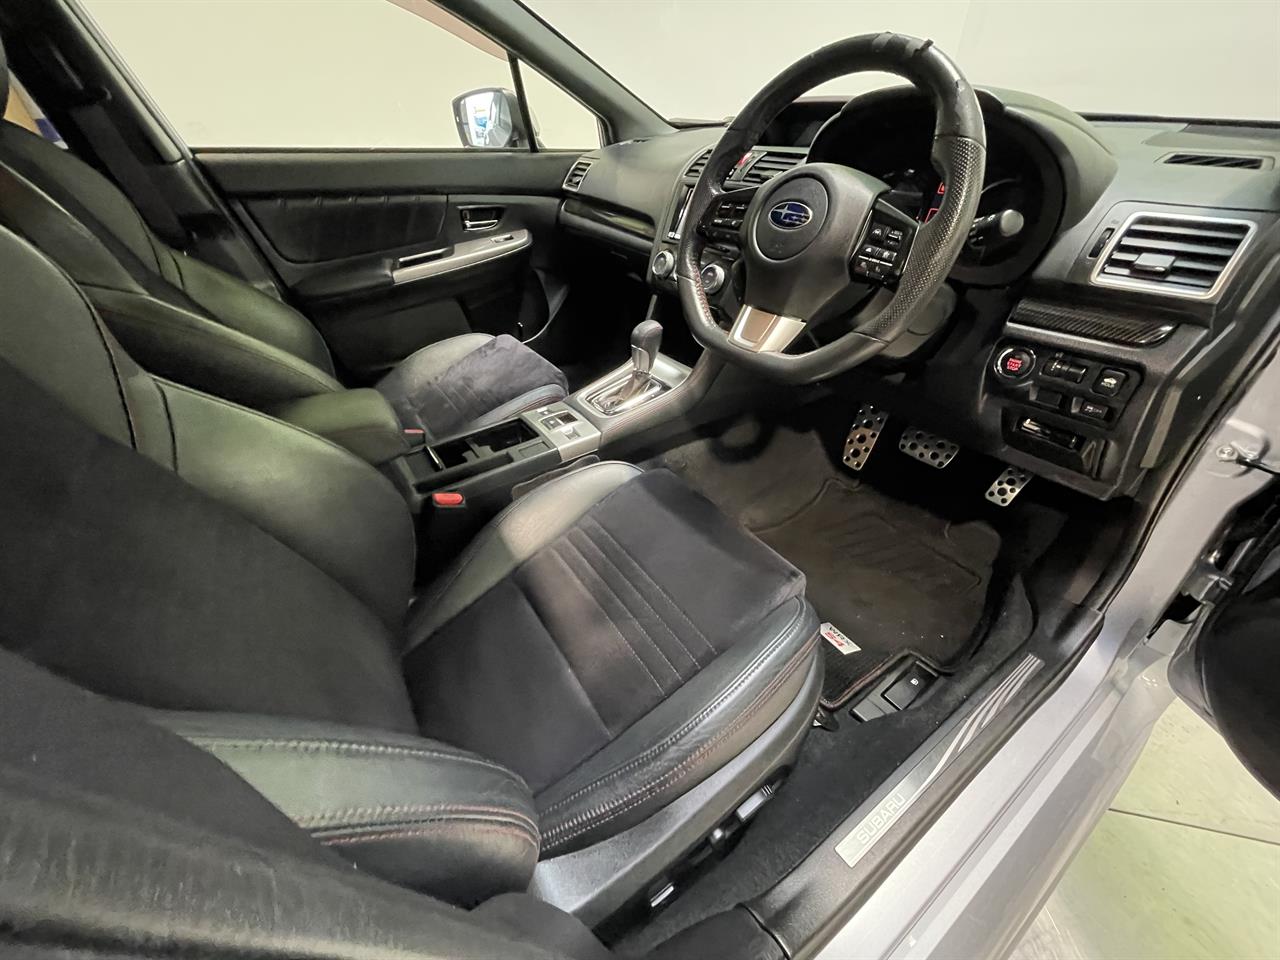 2015 Subaru wrx